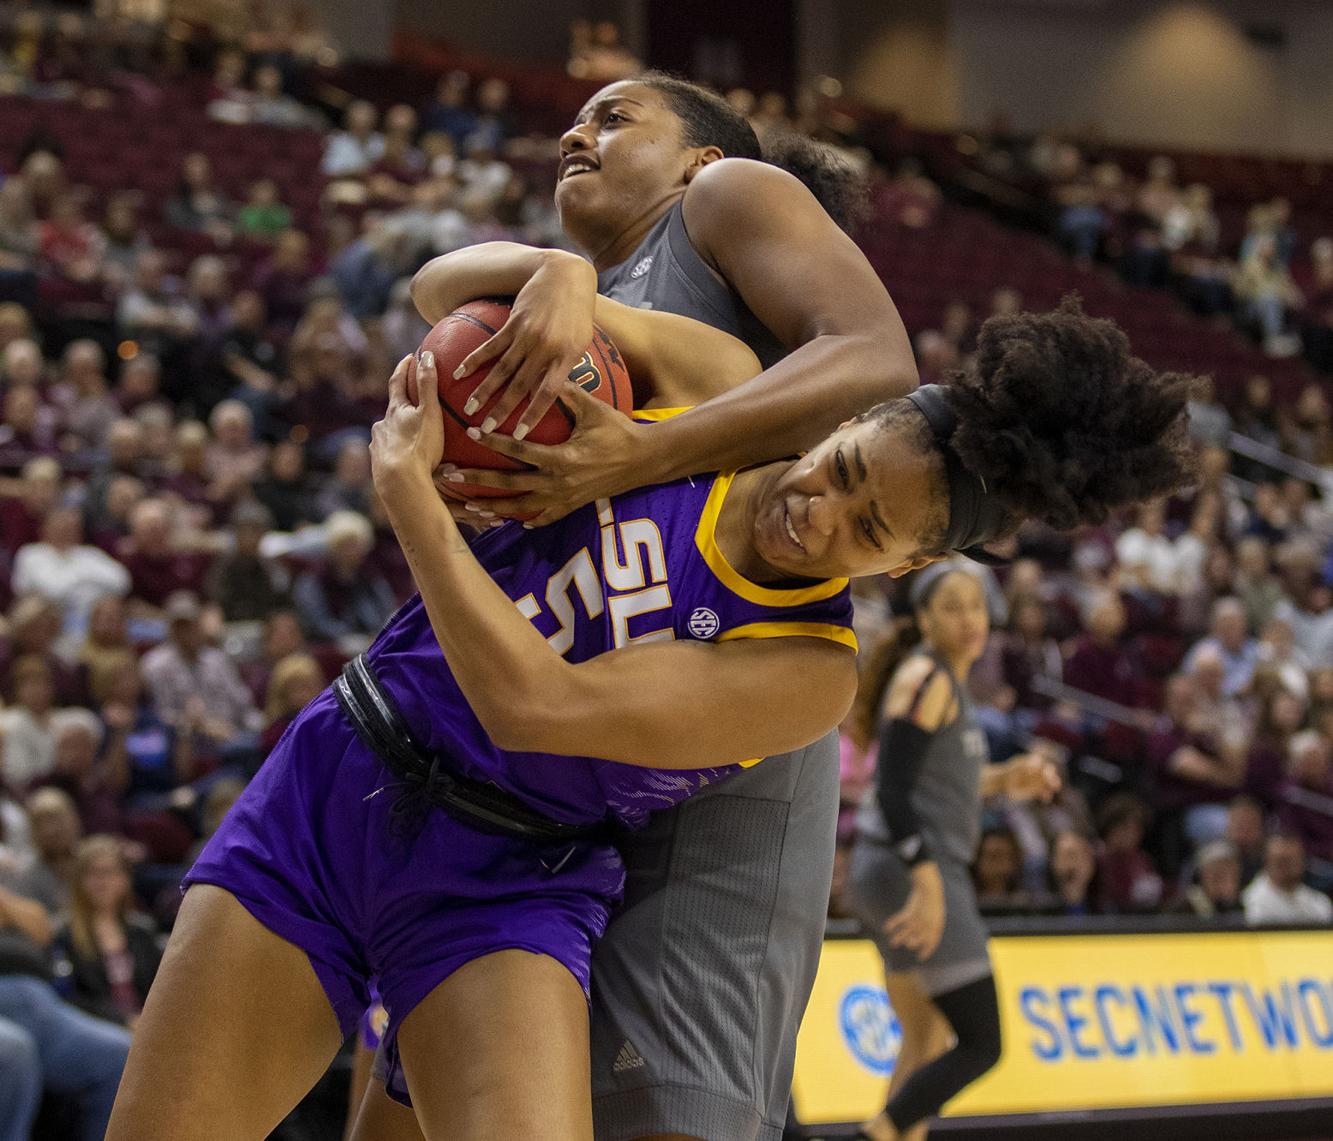 Gallery Texas A&M women's basketball vs LSU